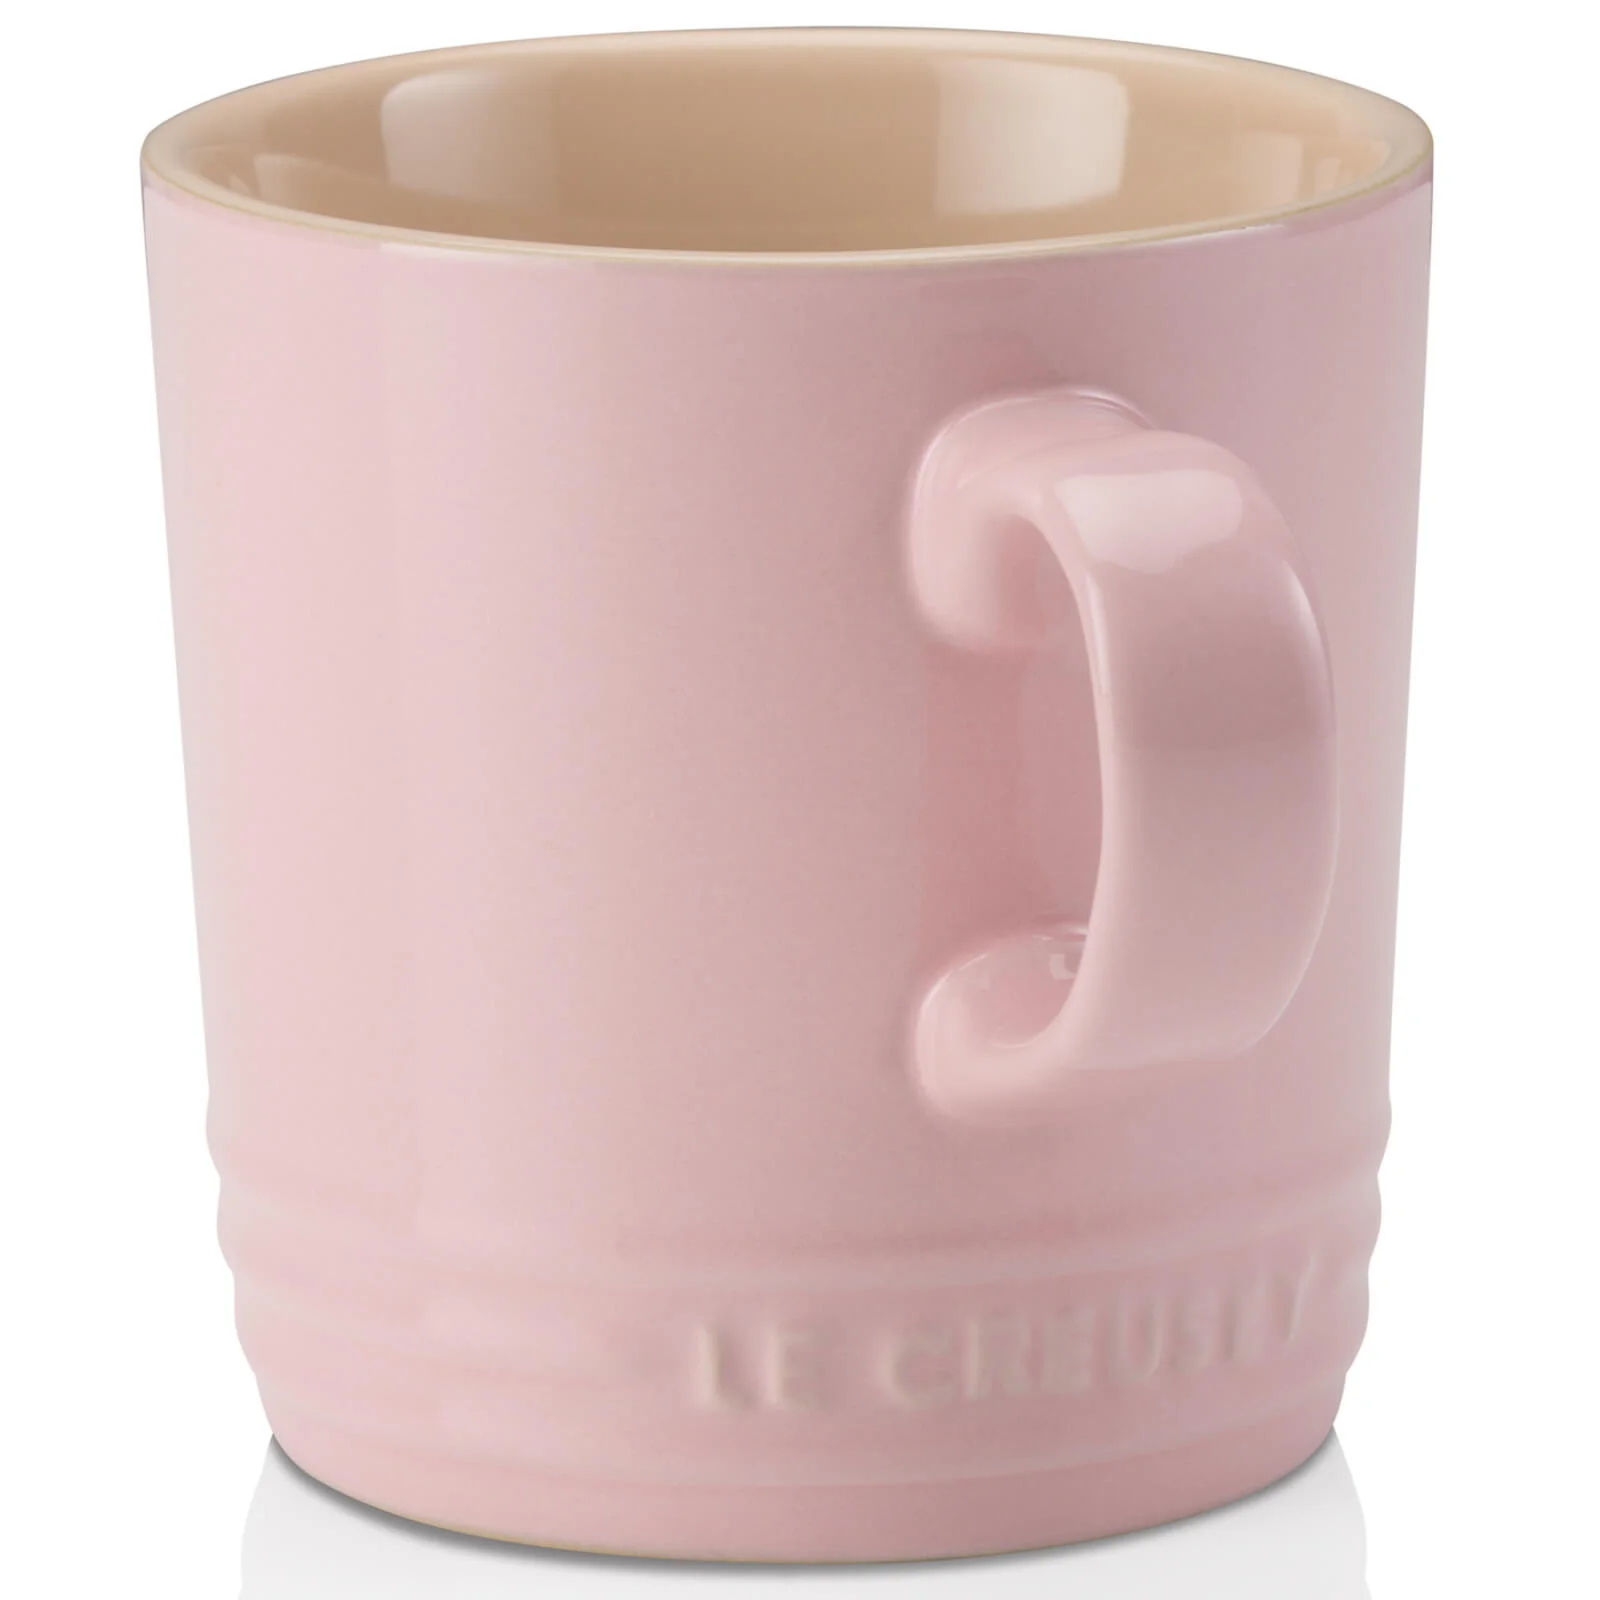 Le Creuset Stoneware Mug - 350ml - Chiffon Pink Image 1